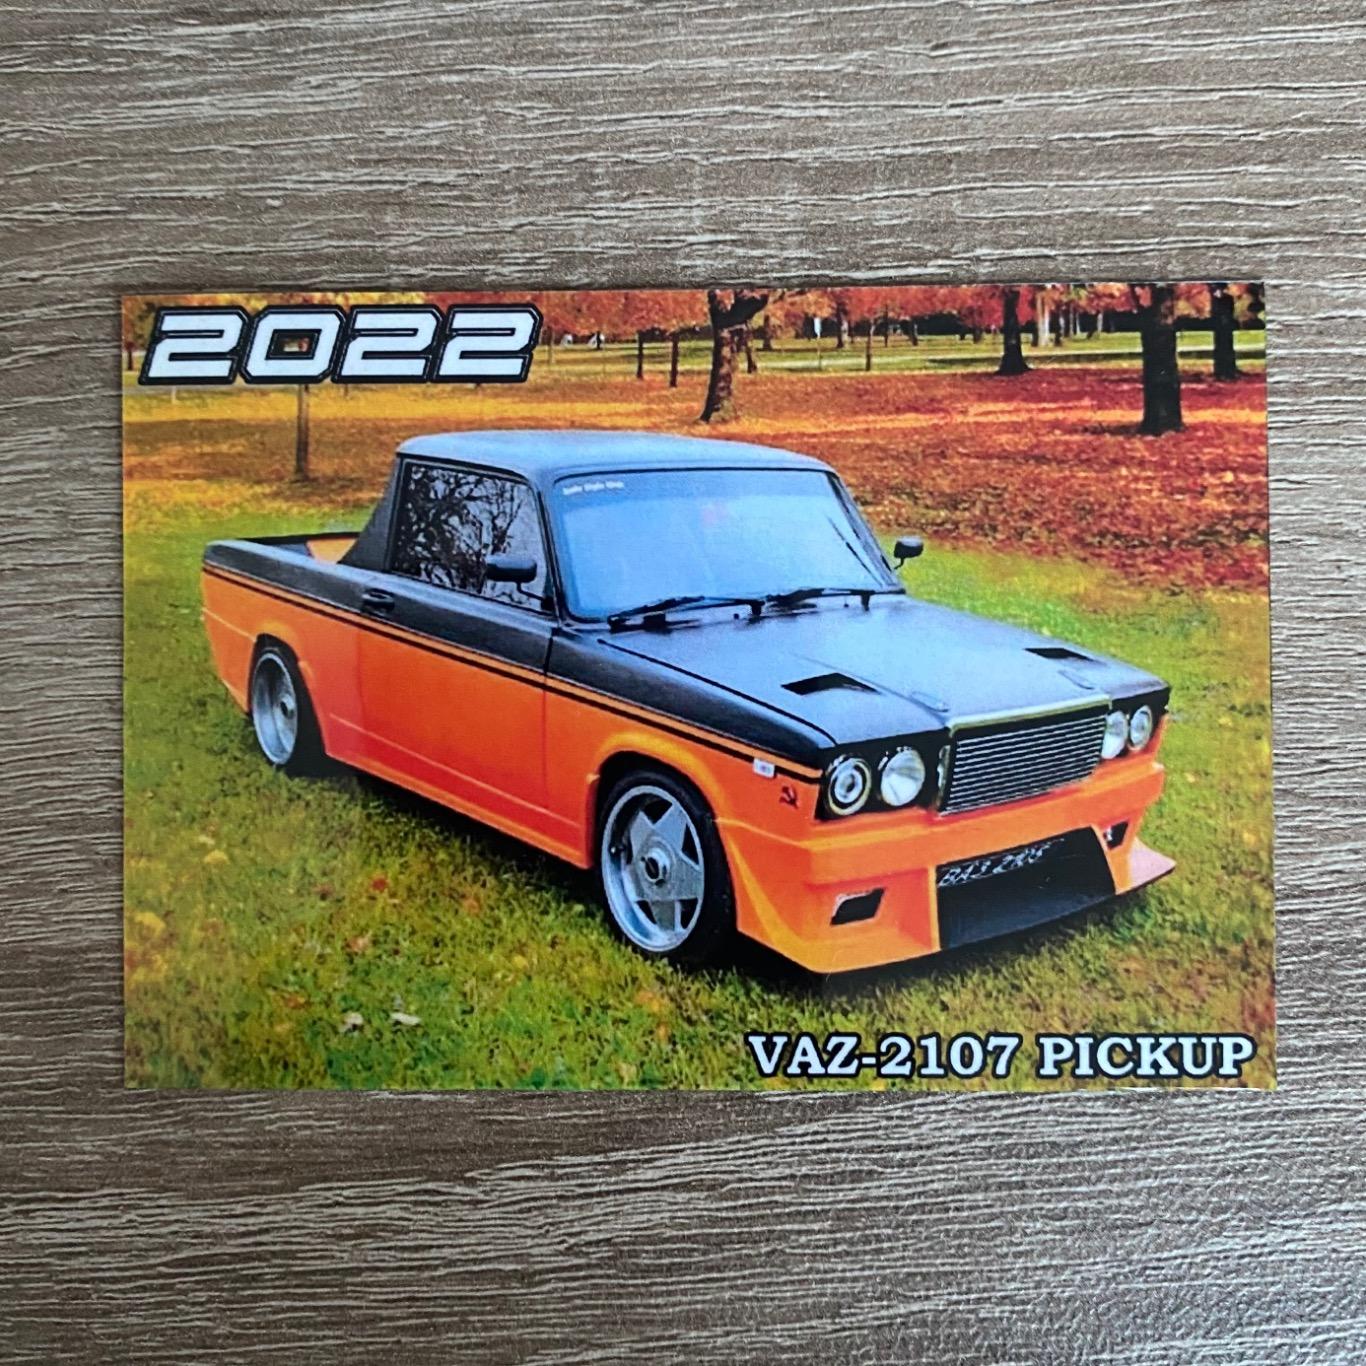 Календарь ВАЗ 2107 2022 год PickUp